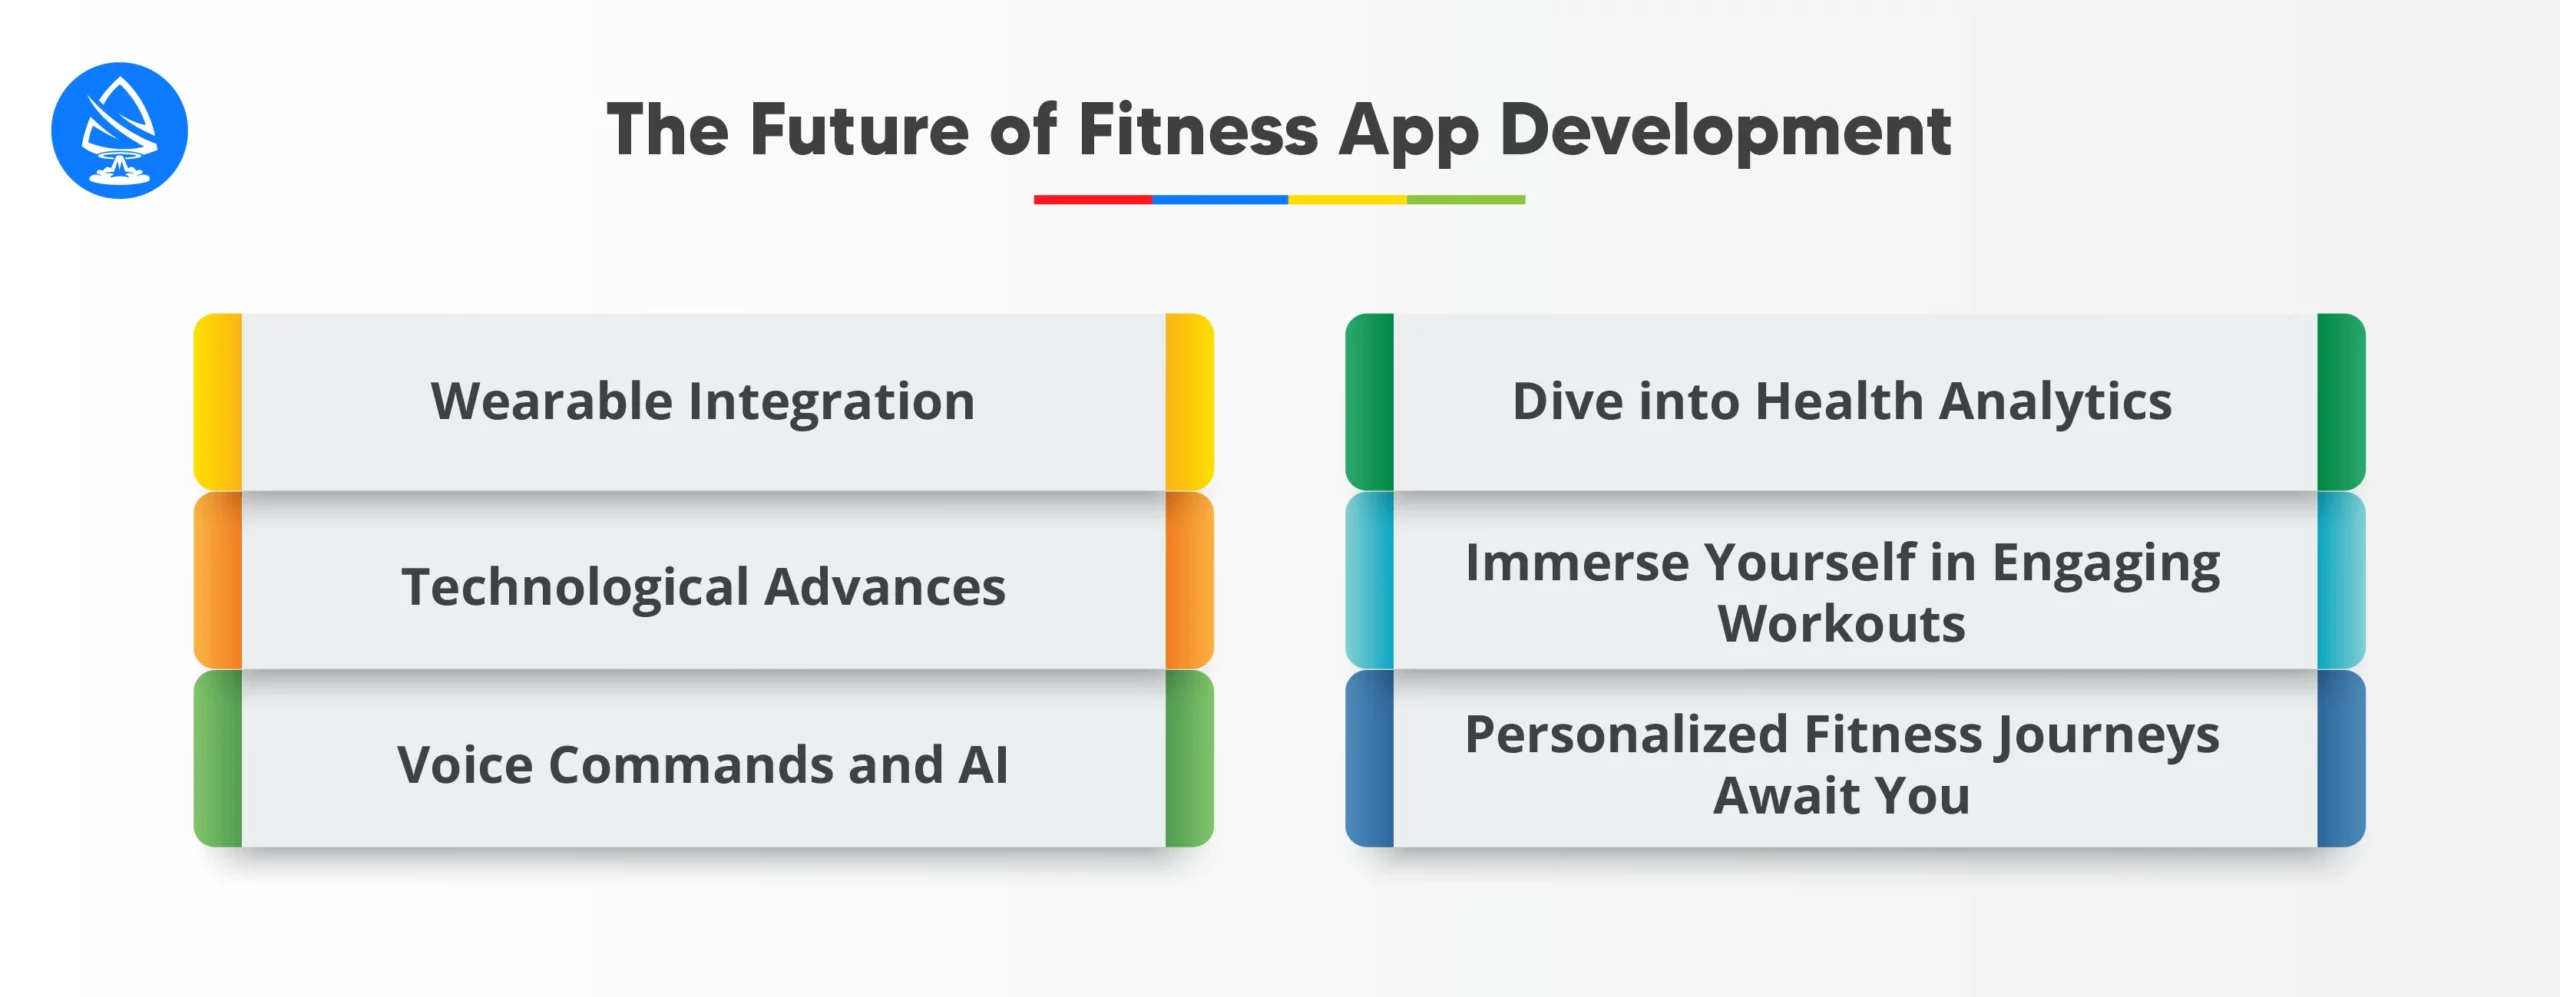 The Future of Fitness App Development